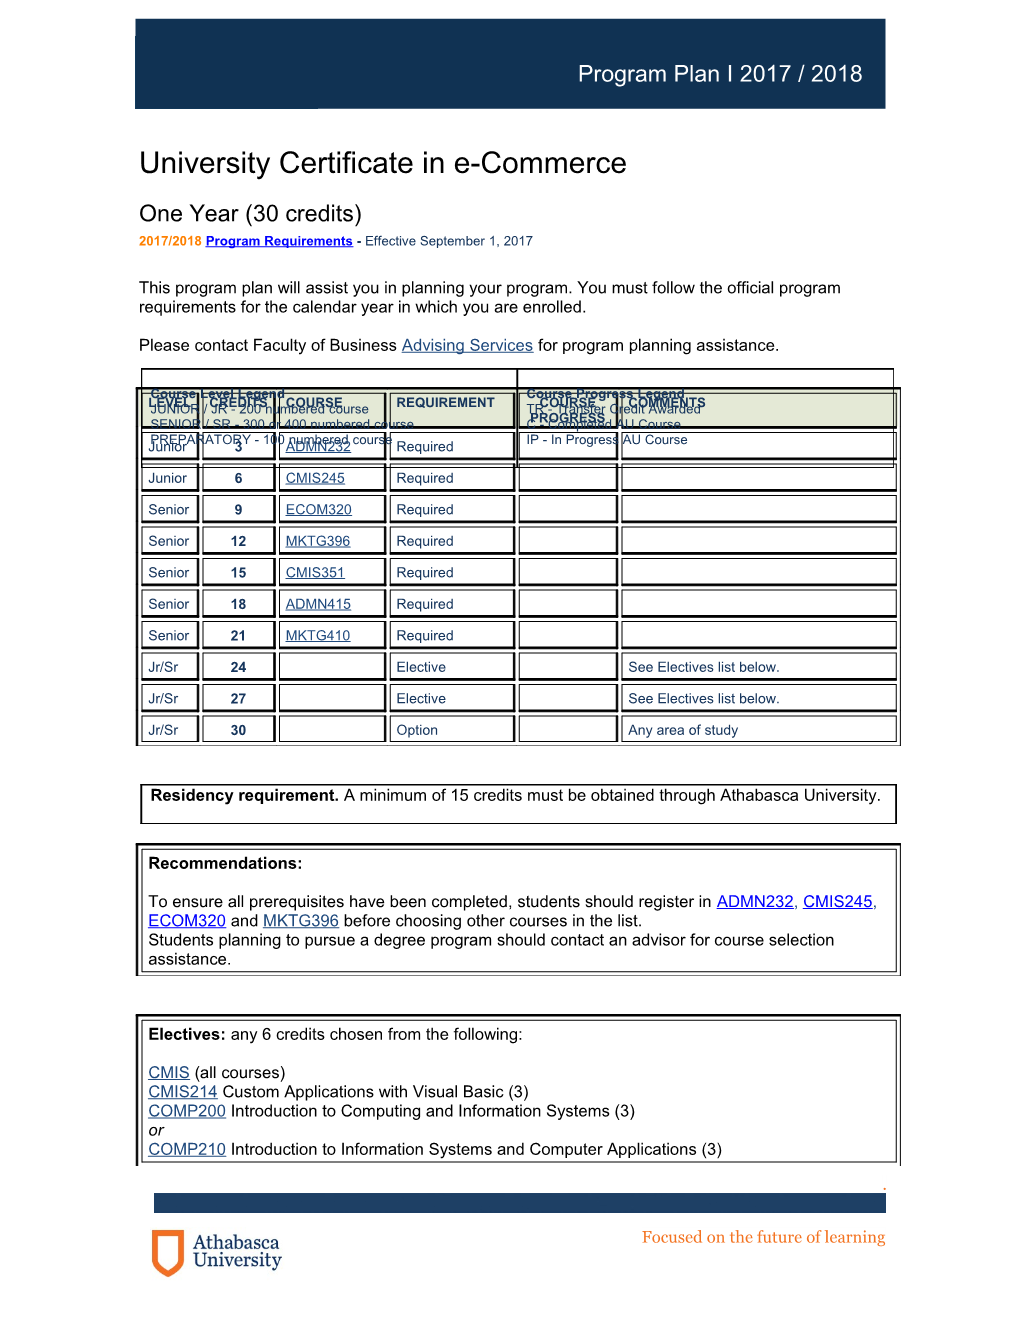 University Certificate in E-Commerce